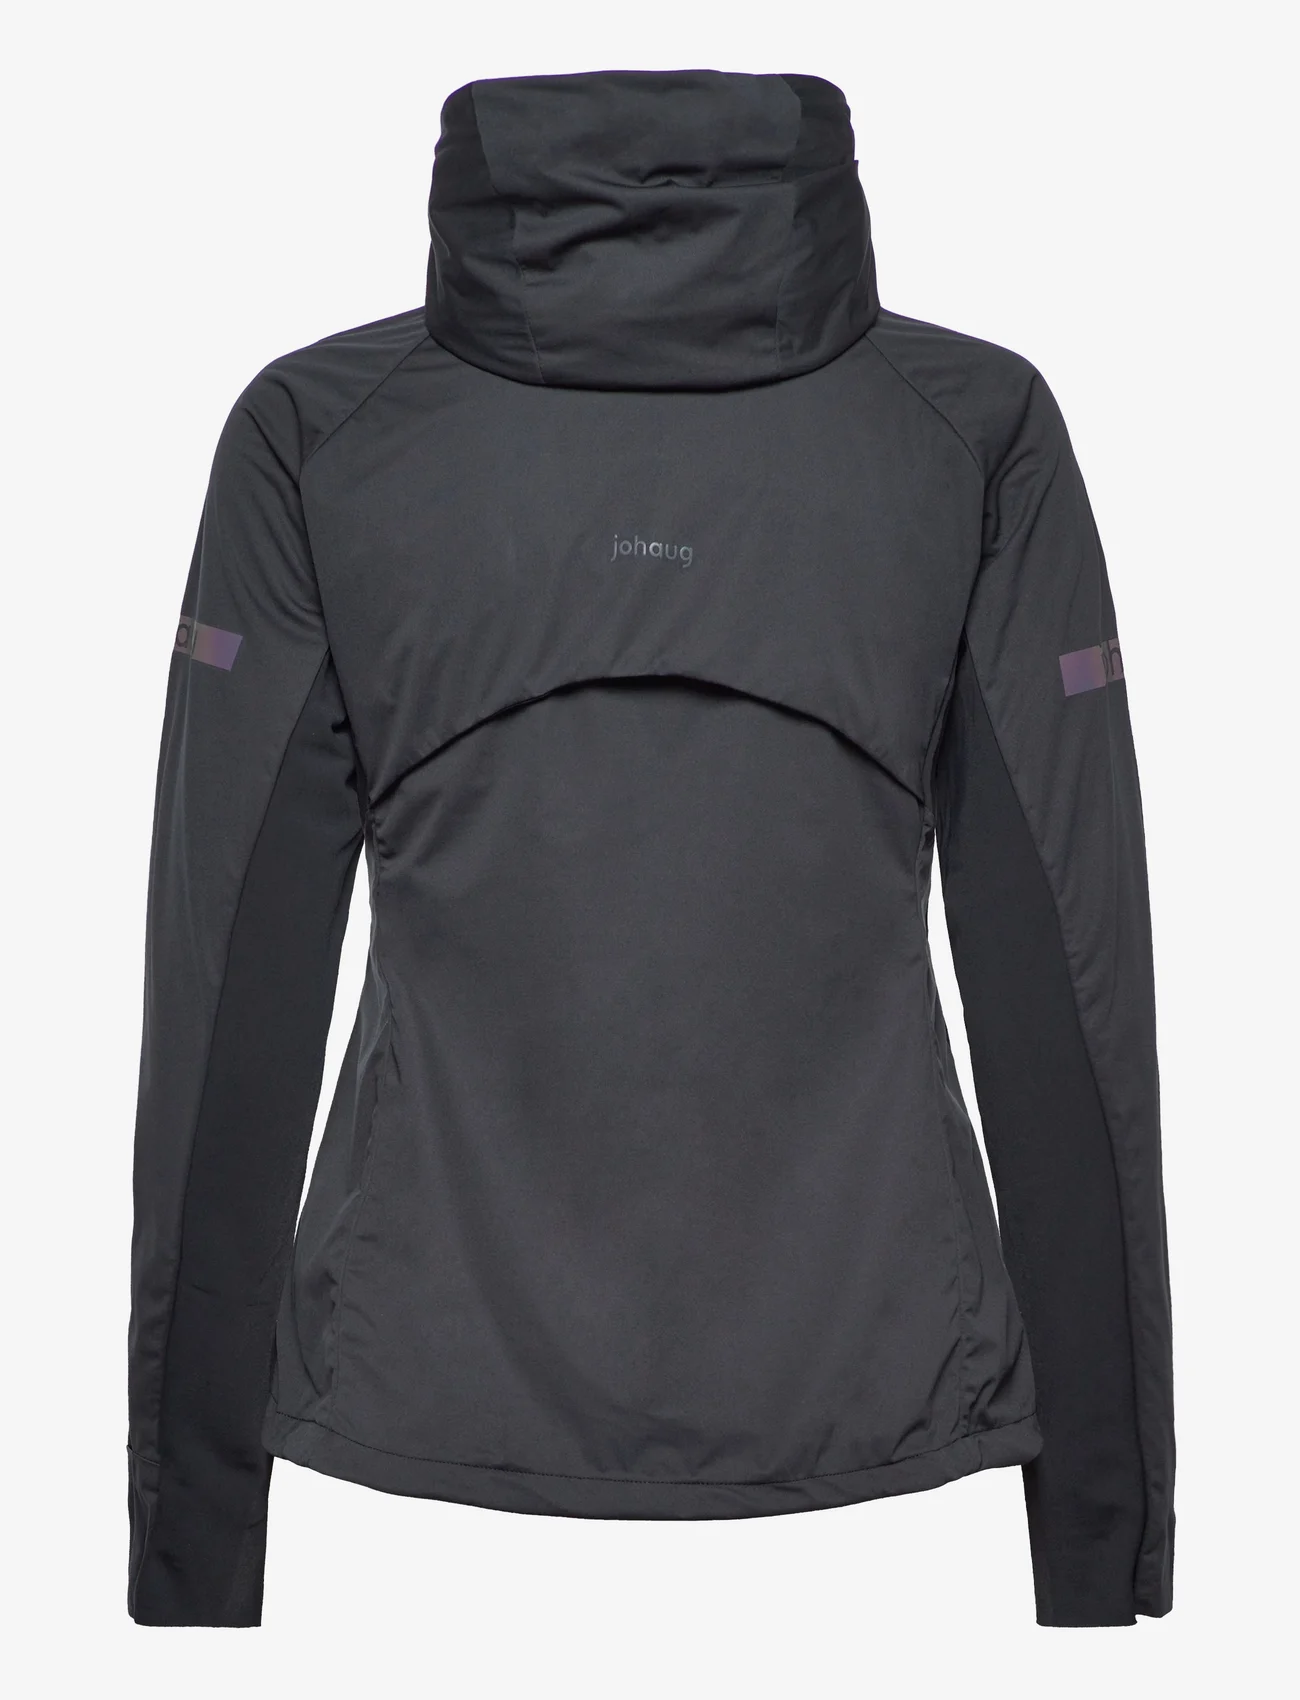 Johaug - Concept Jacket 2.0 - hiihto- & laskettelutakit - black - 1